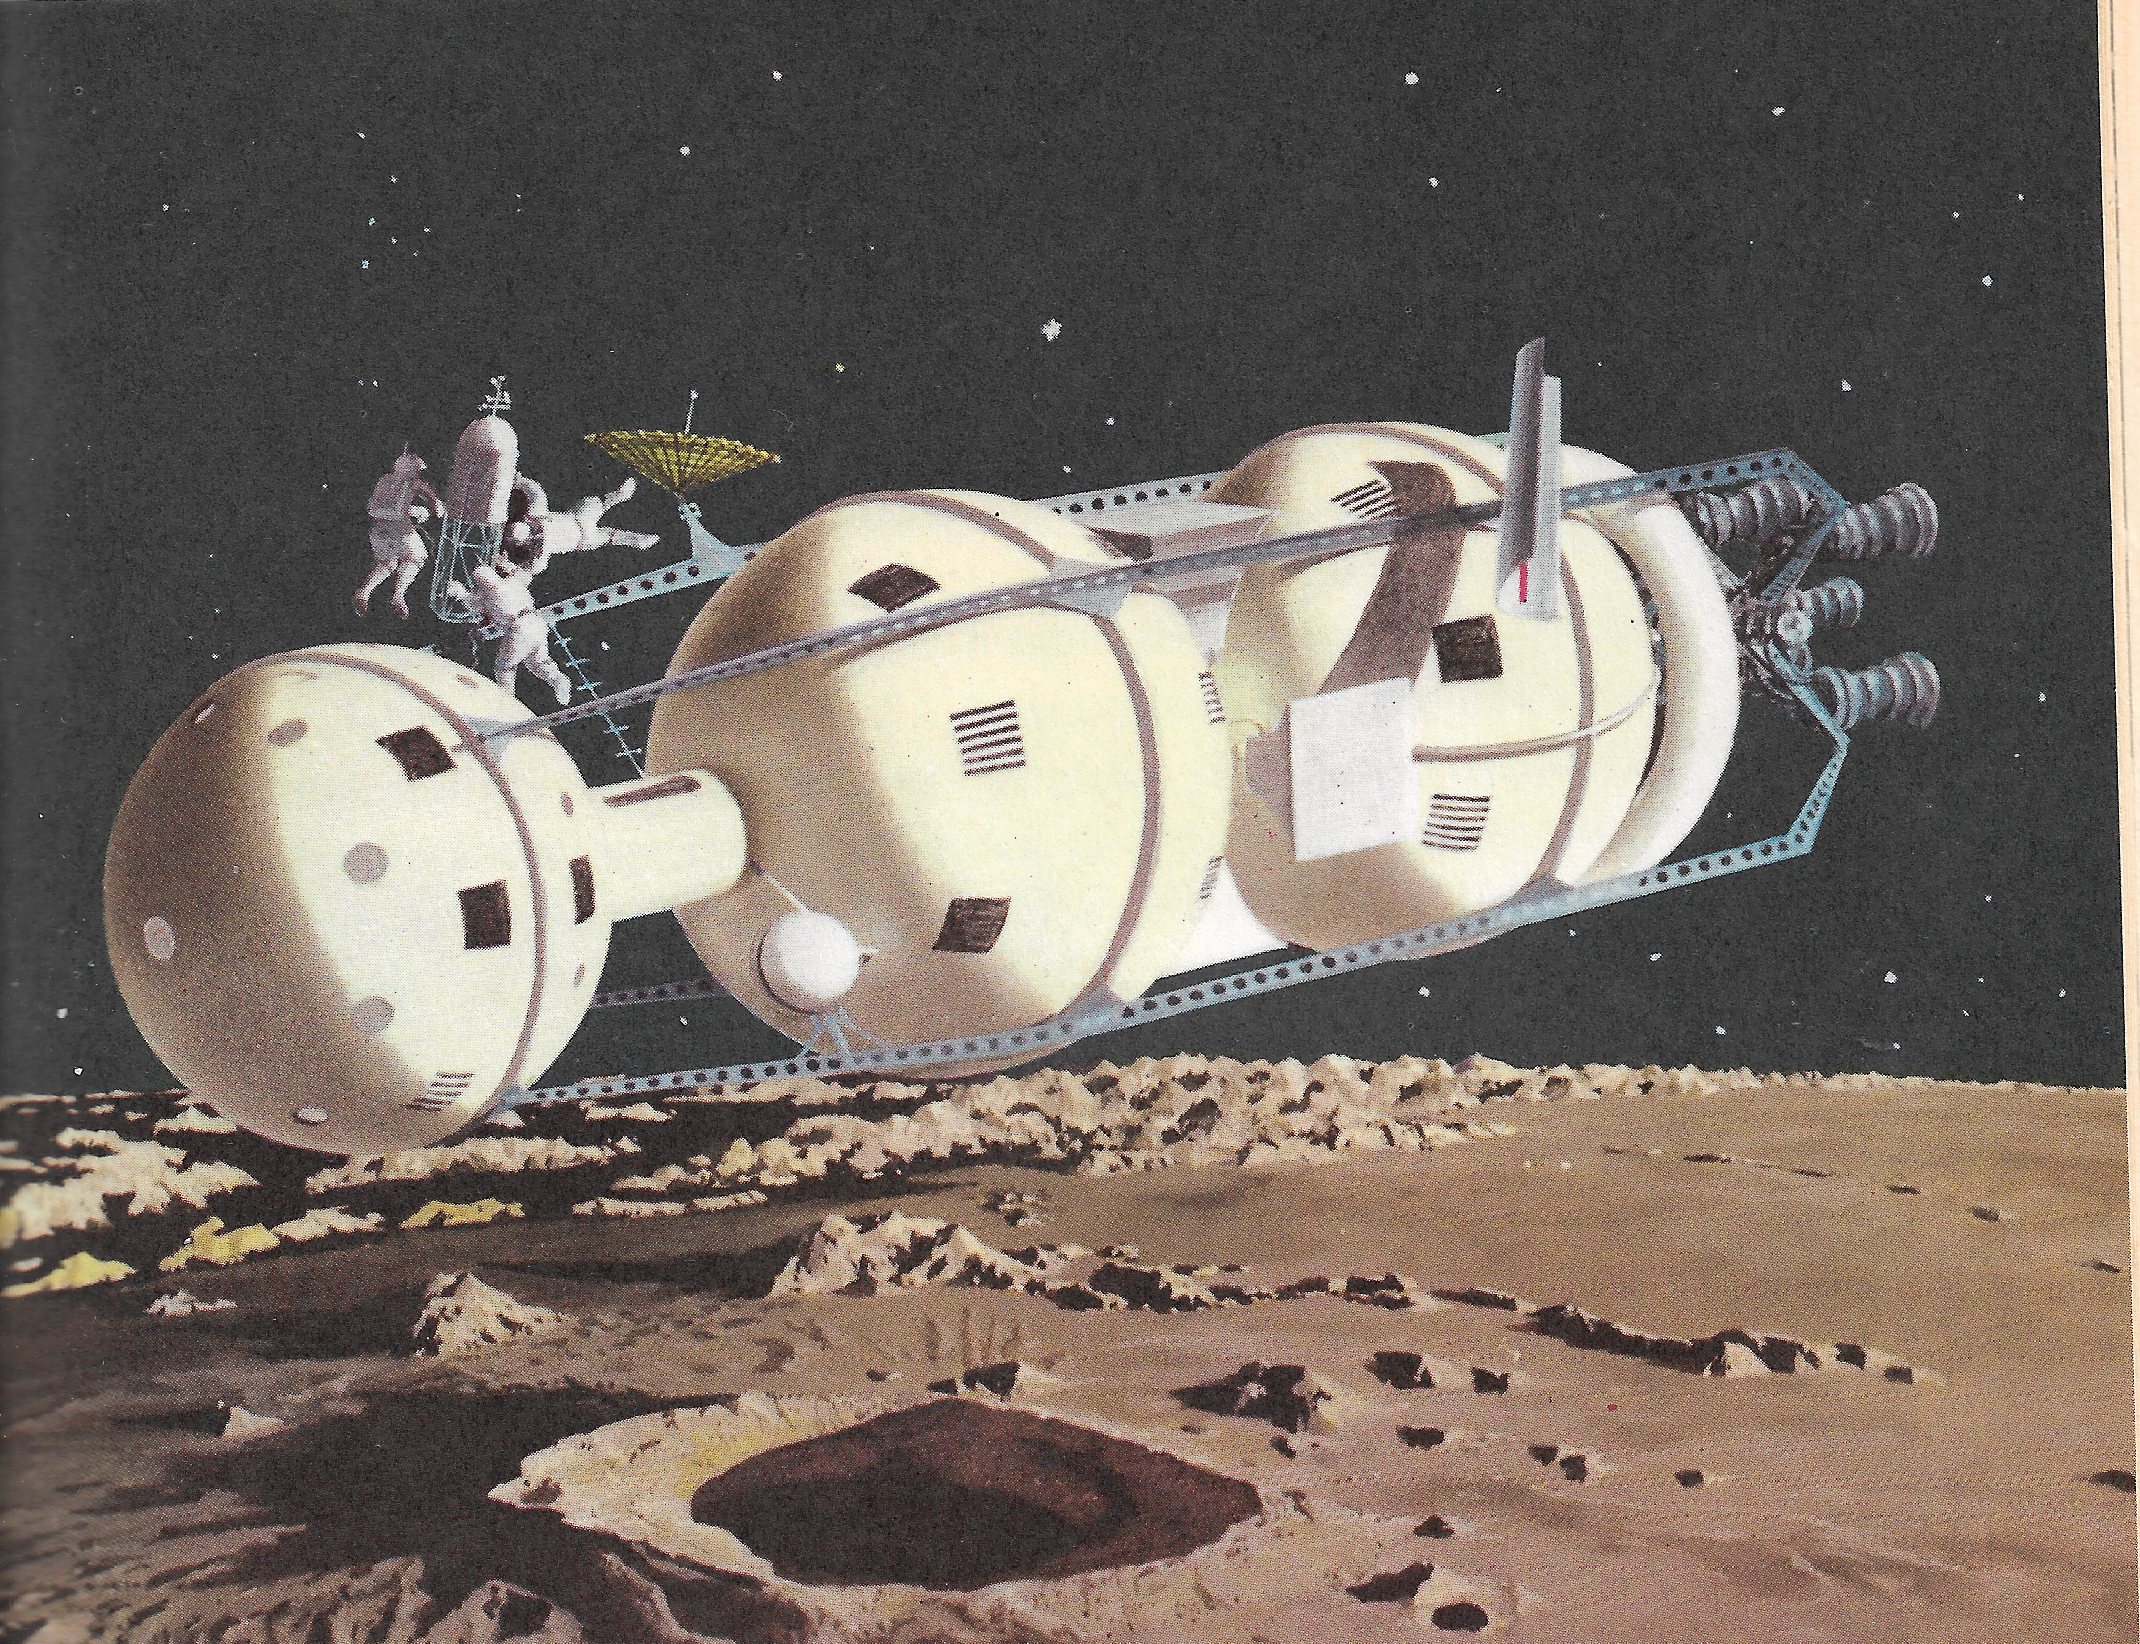 lunar probe over moon